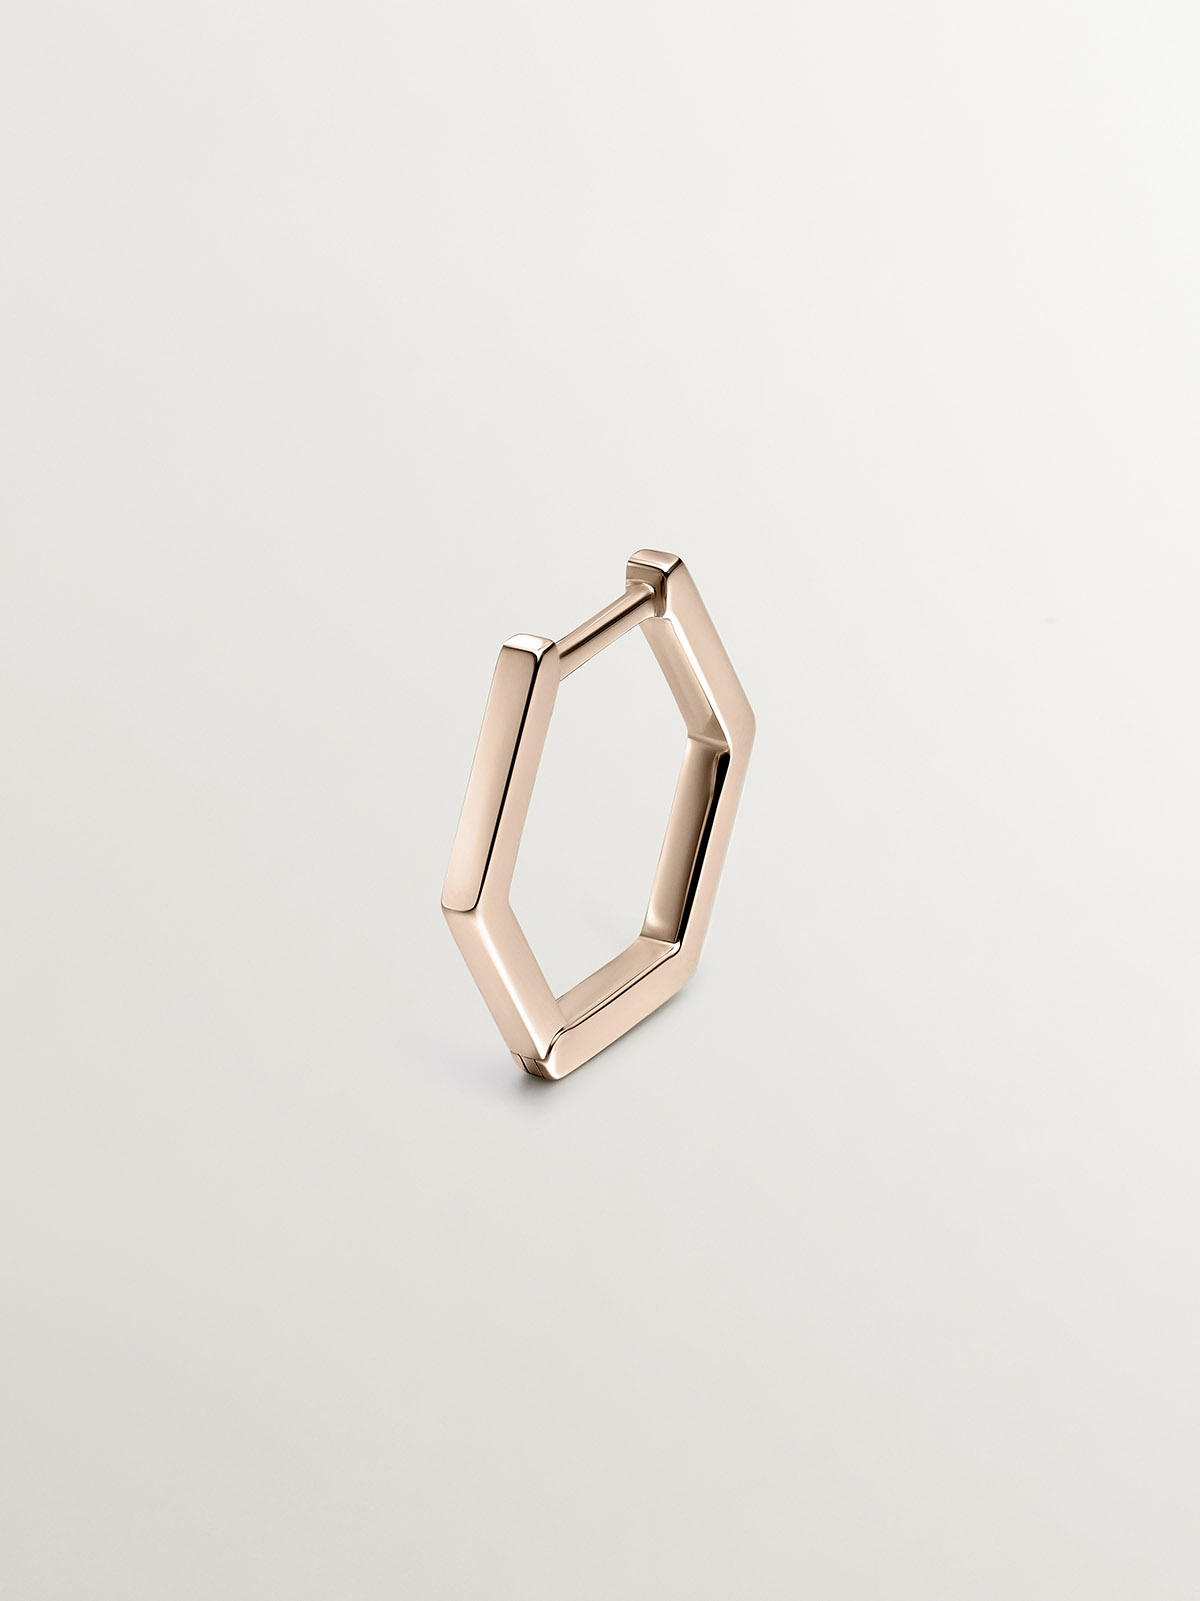 Individual 9K rose gold hoop earring with hexagonal shape.